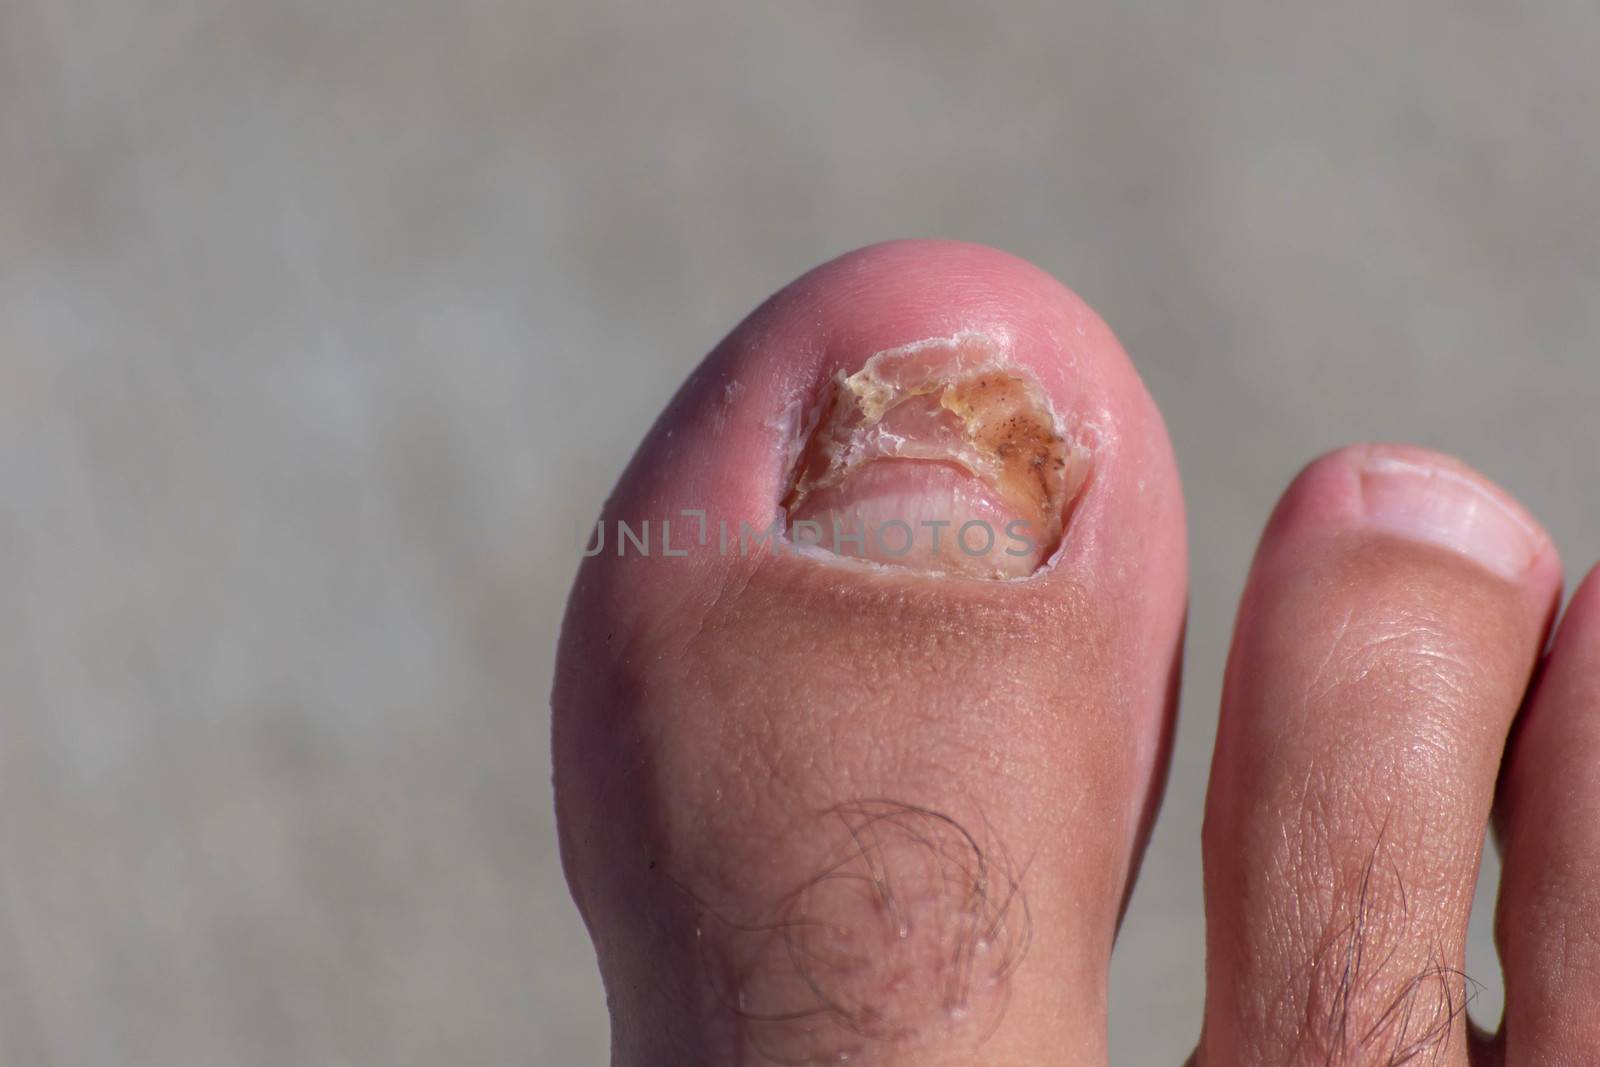 Big toe nail broken off and growing back after an injury.